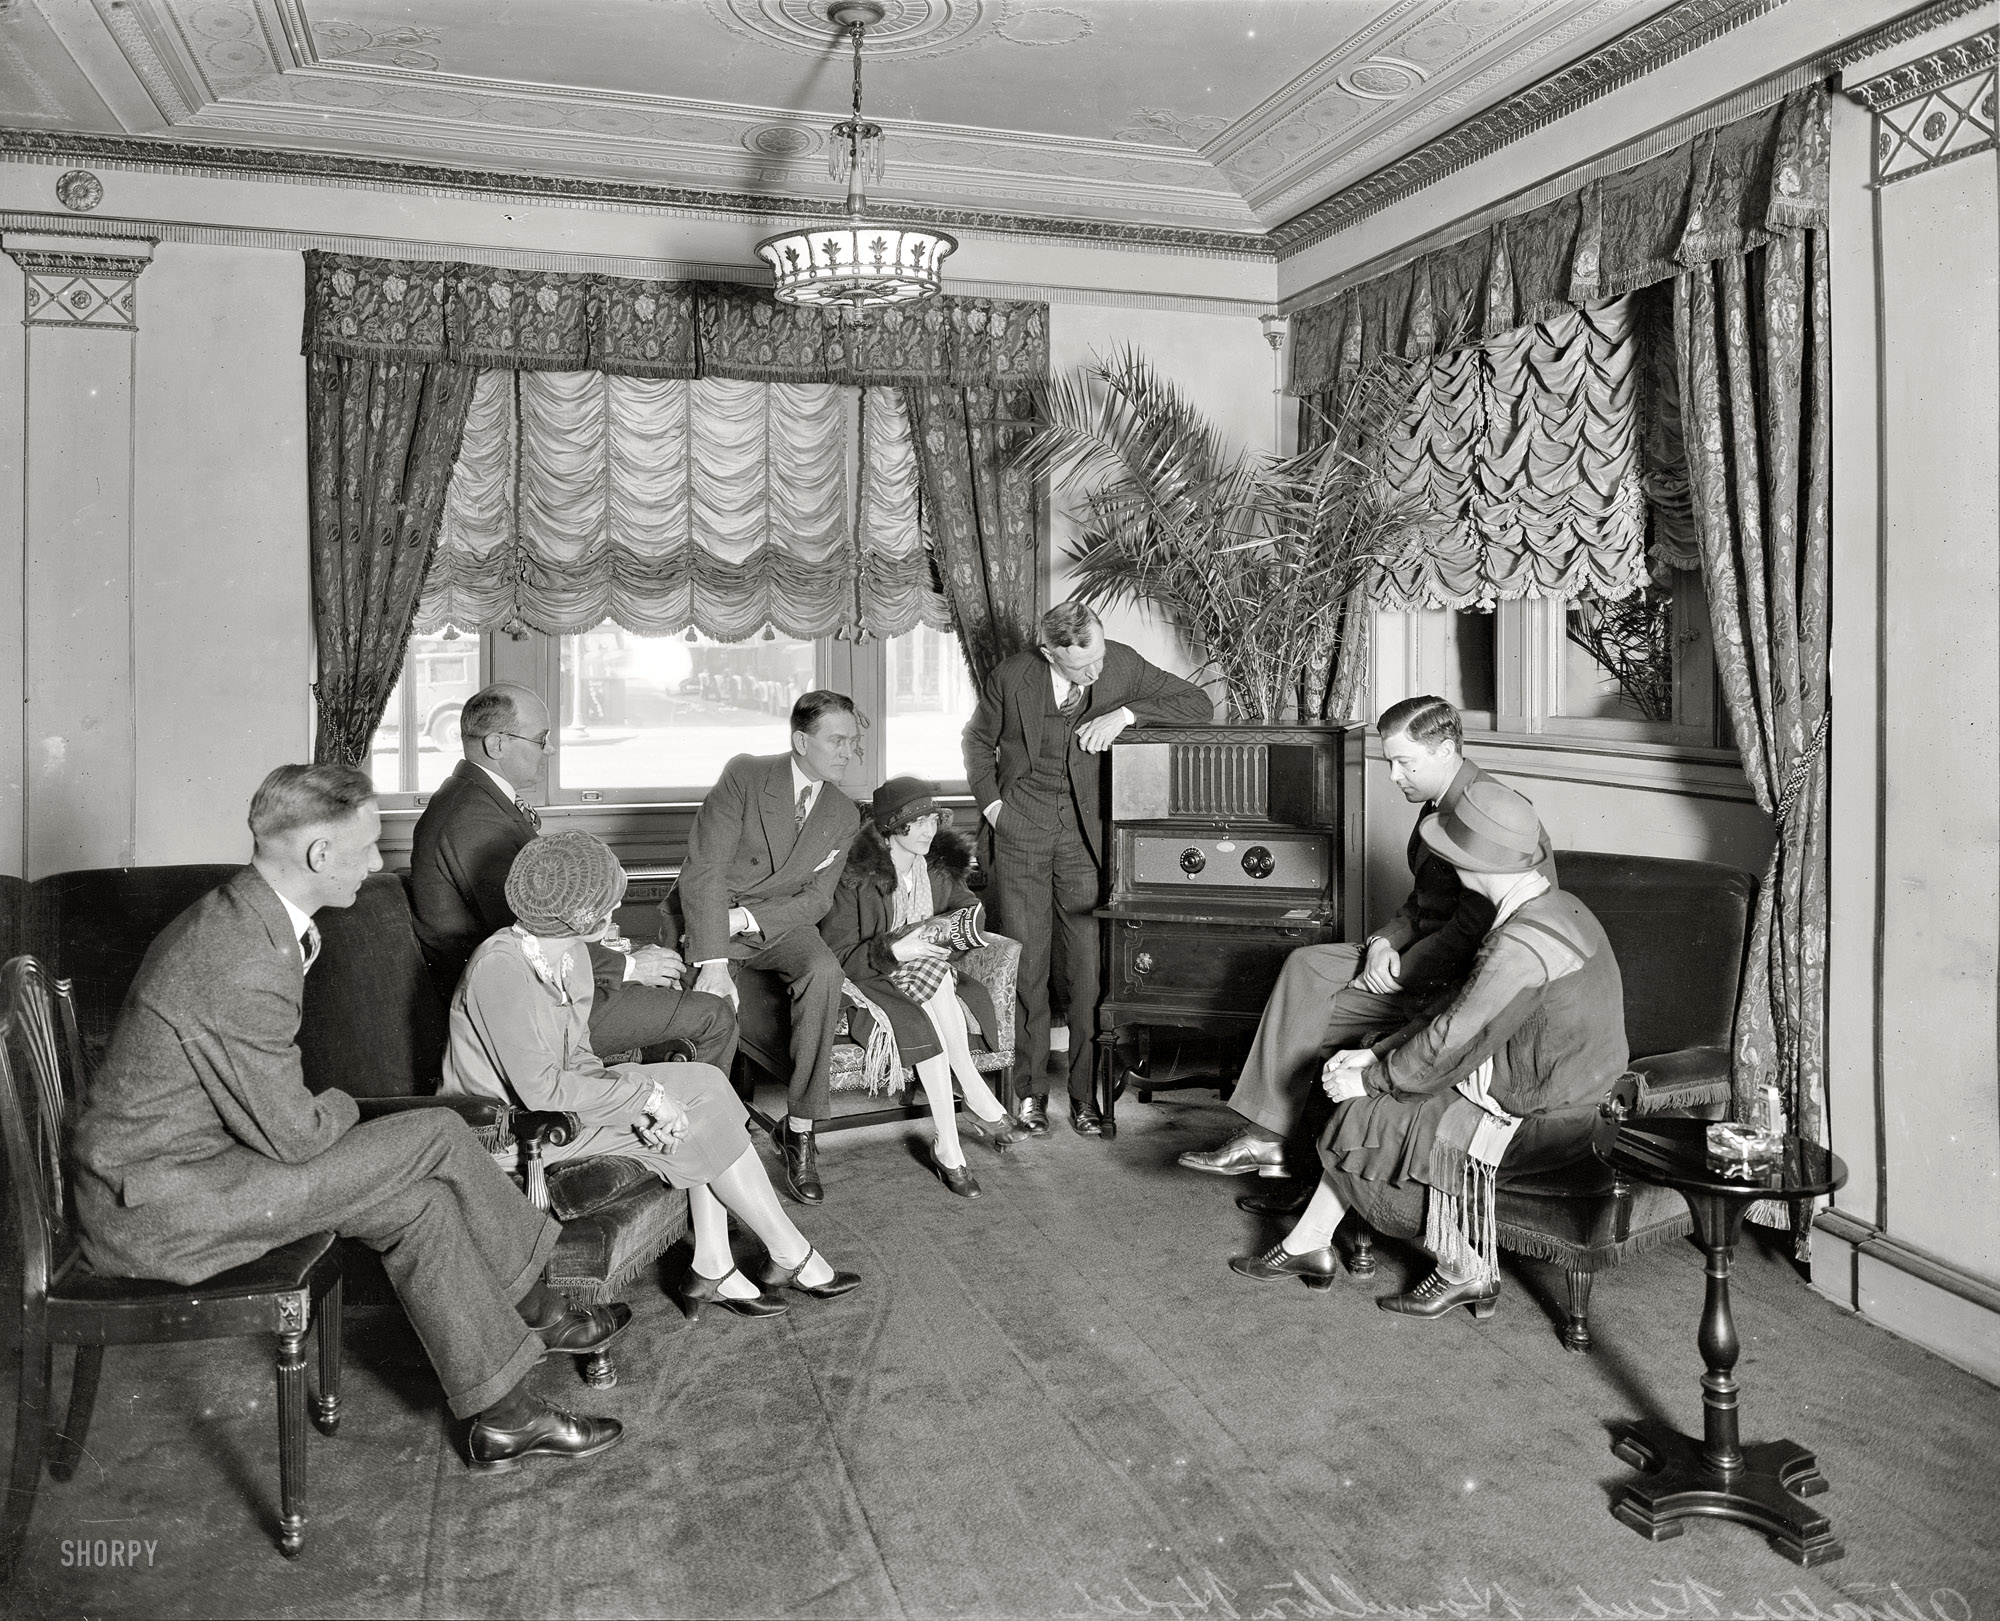 Washington, D.C., circa 1927. "Thomas R. Shipp group, Hamilton Hotel. Atwater Kent standing by radio." National Photo Co. safety negative. View full size.